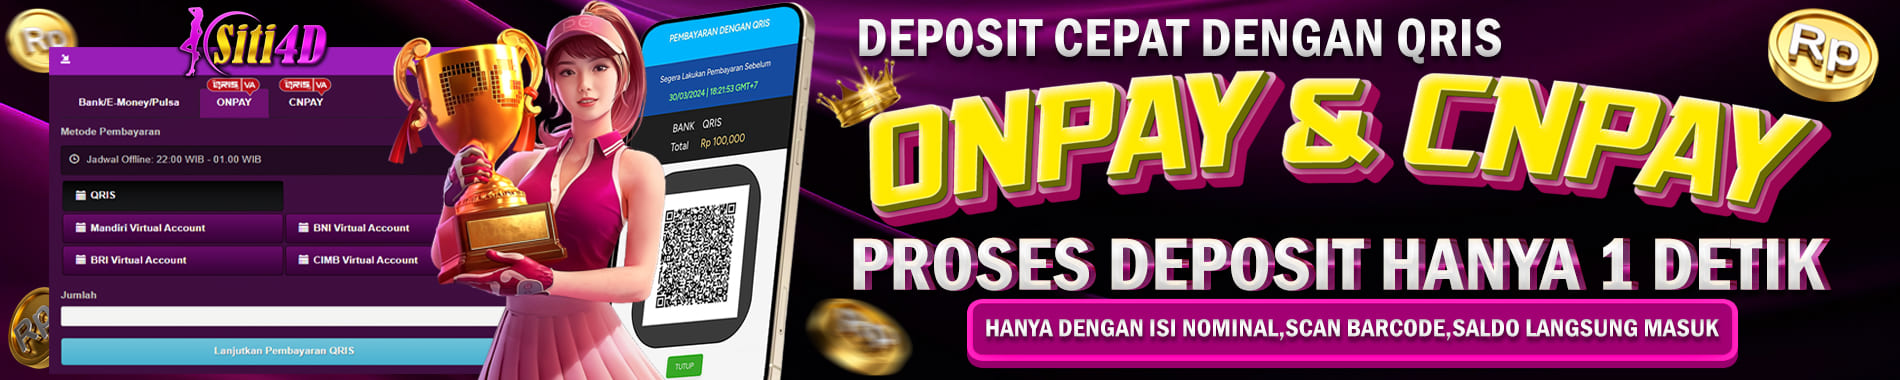 siti4d deposit cepat dengan onpay dan cnpay